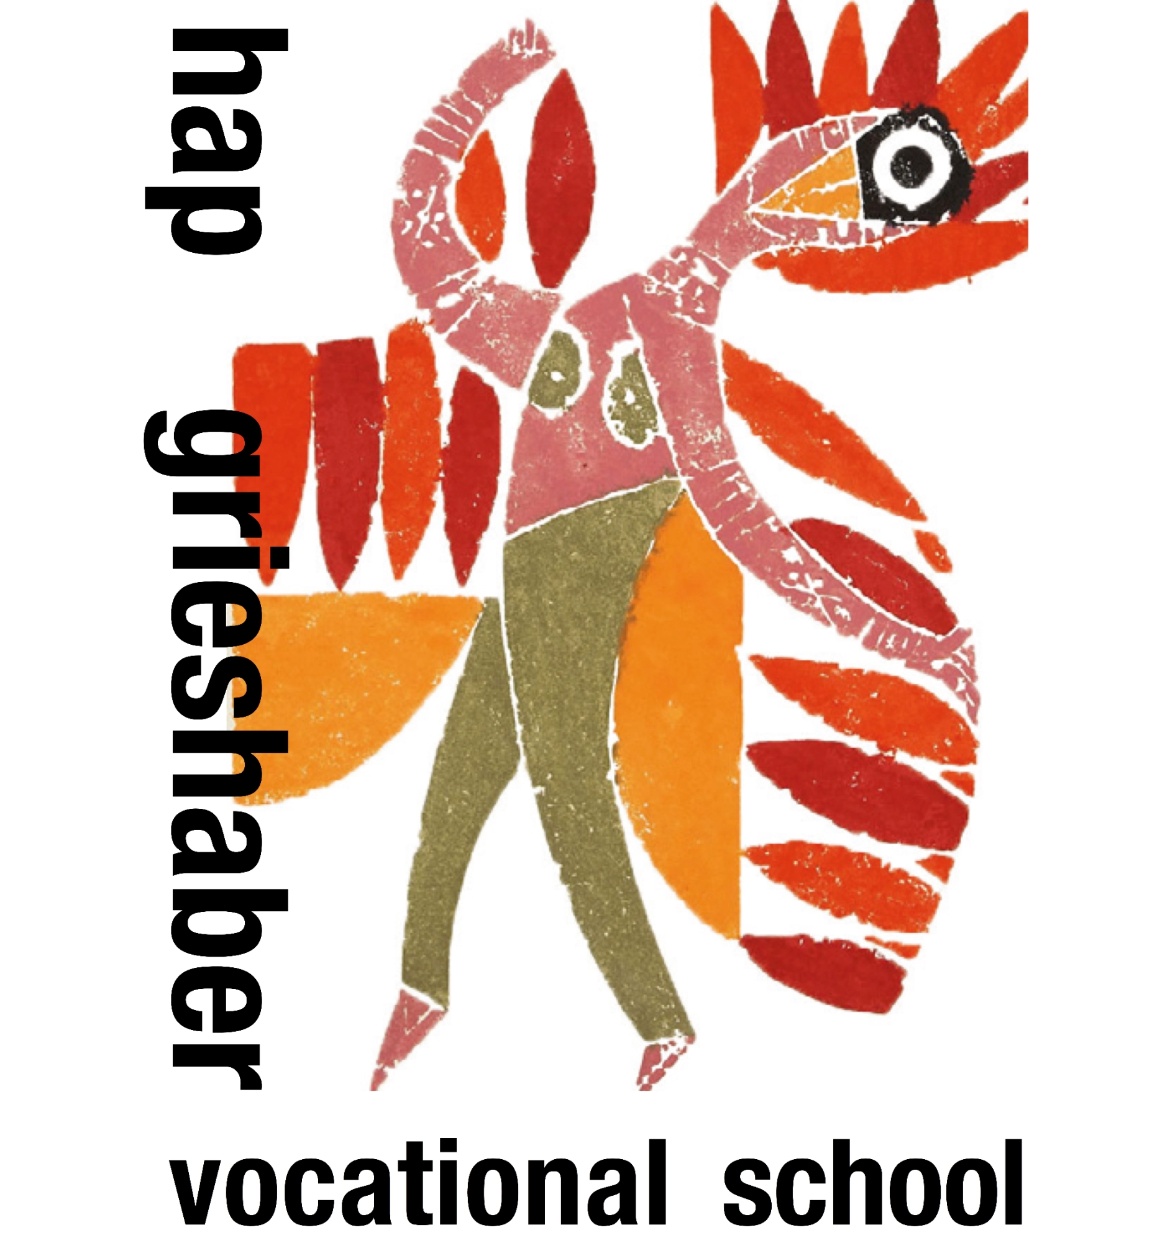 The Hap Grieshaber Vocational School